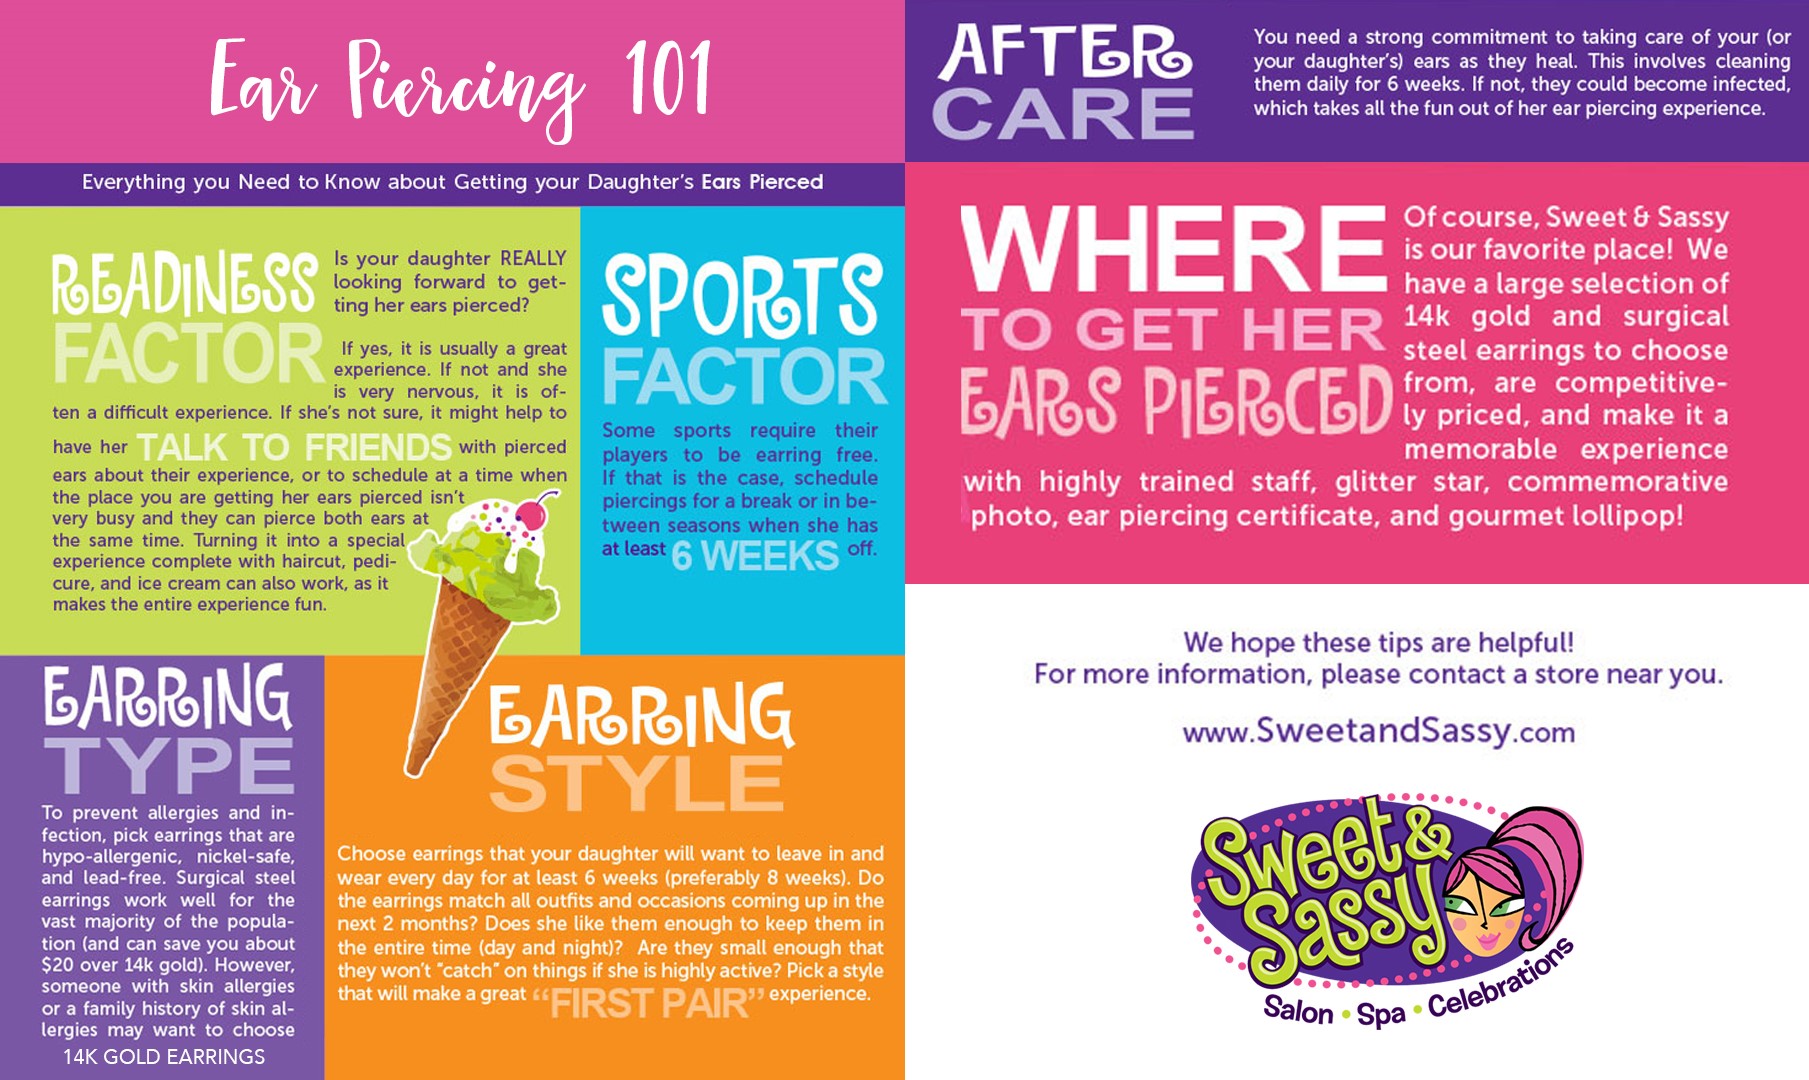 Kids ear piercing tips from Sweet & Sassy